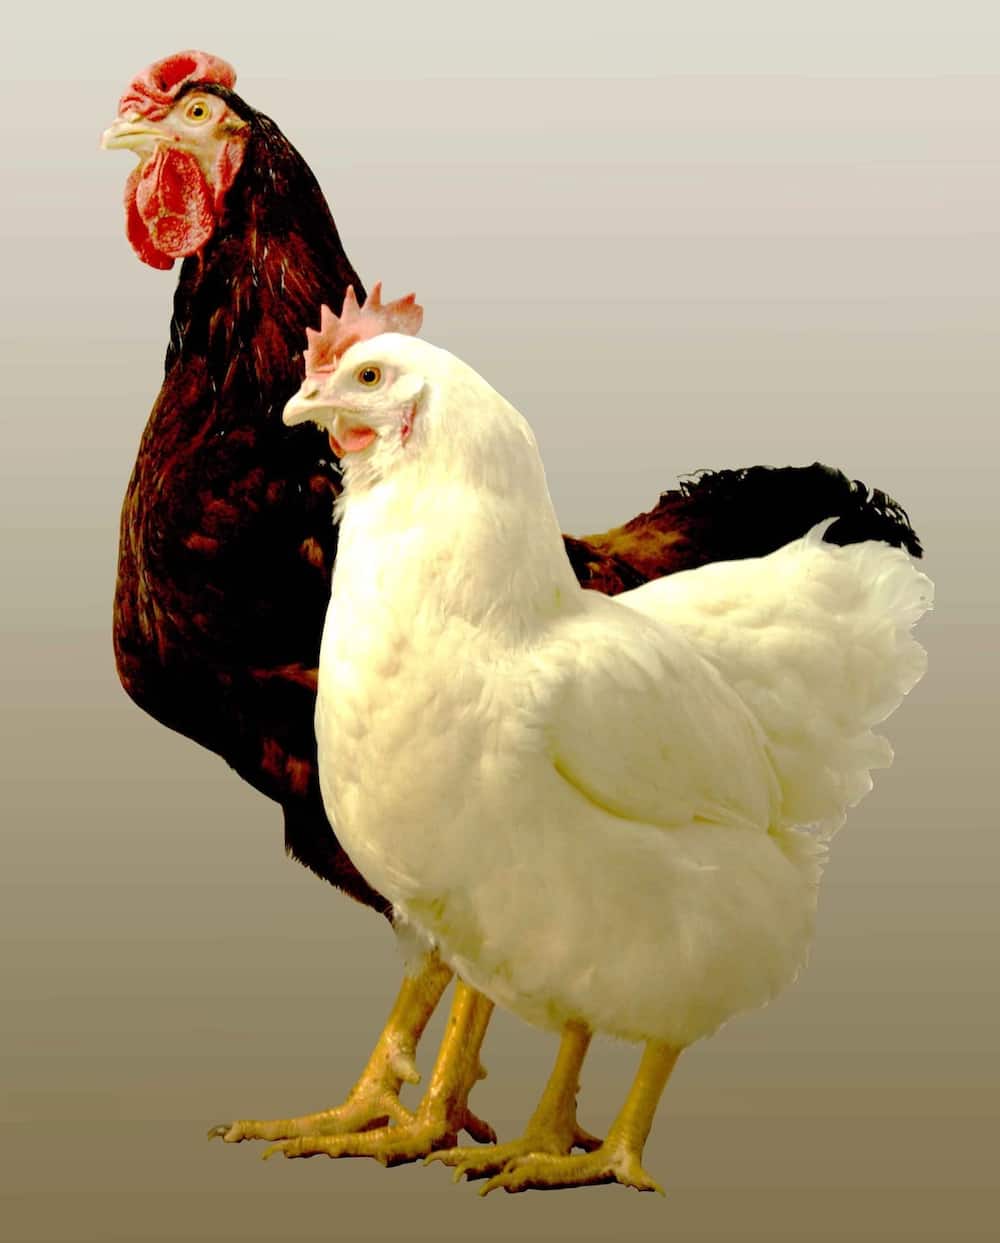 Kienyeji poultry farming in kenya
Layers poultry farming
How to do poultry farming in kenya